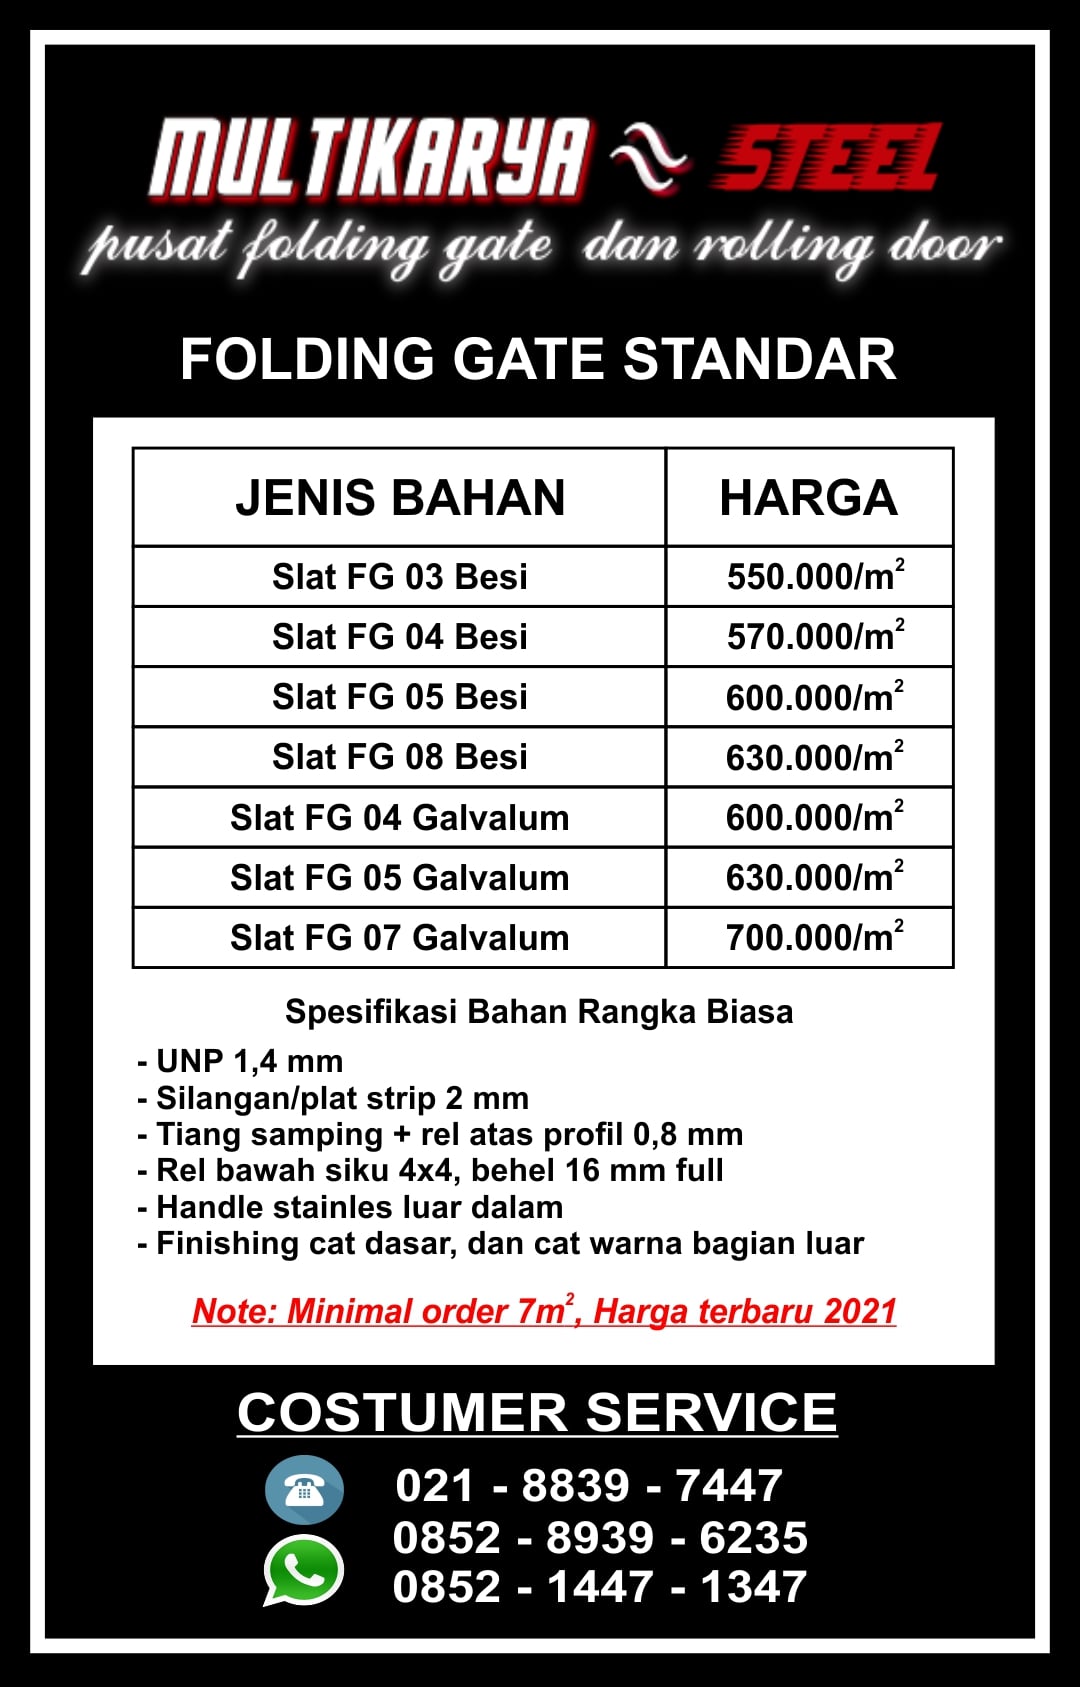 Daftar Harga Folding Gate Mustika Jaya Murah Multi Karya Steel